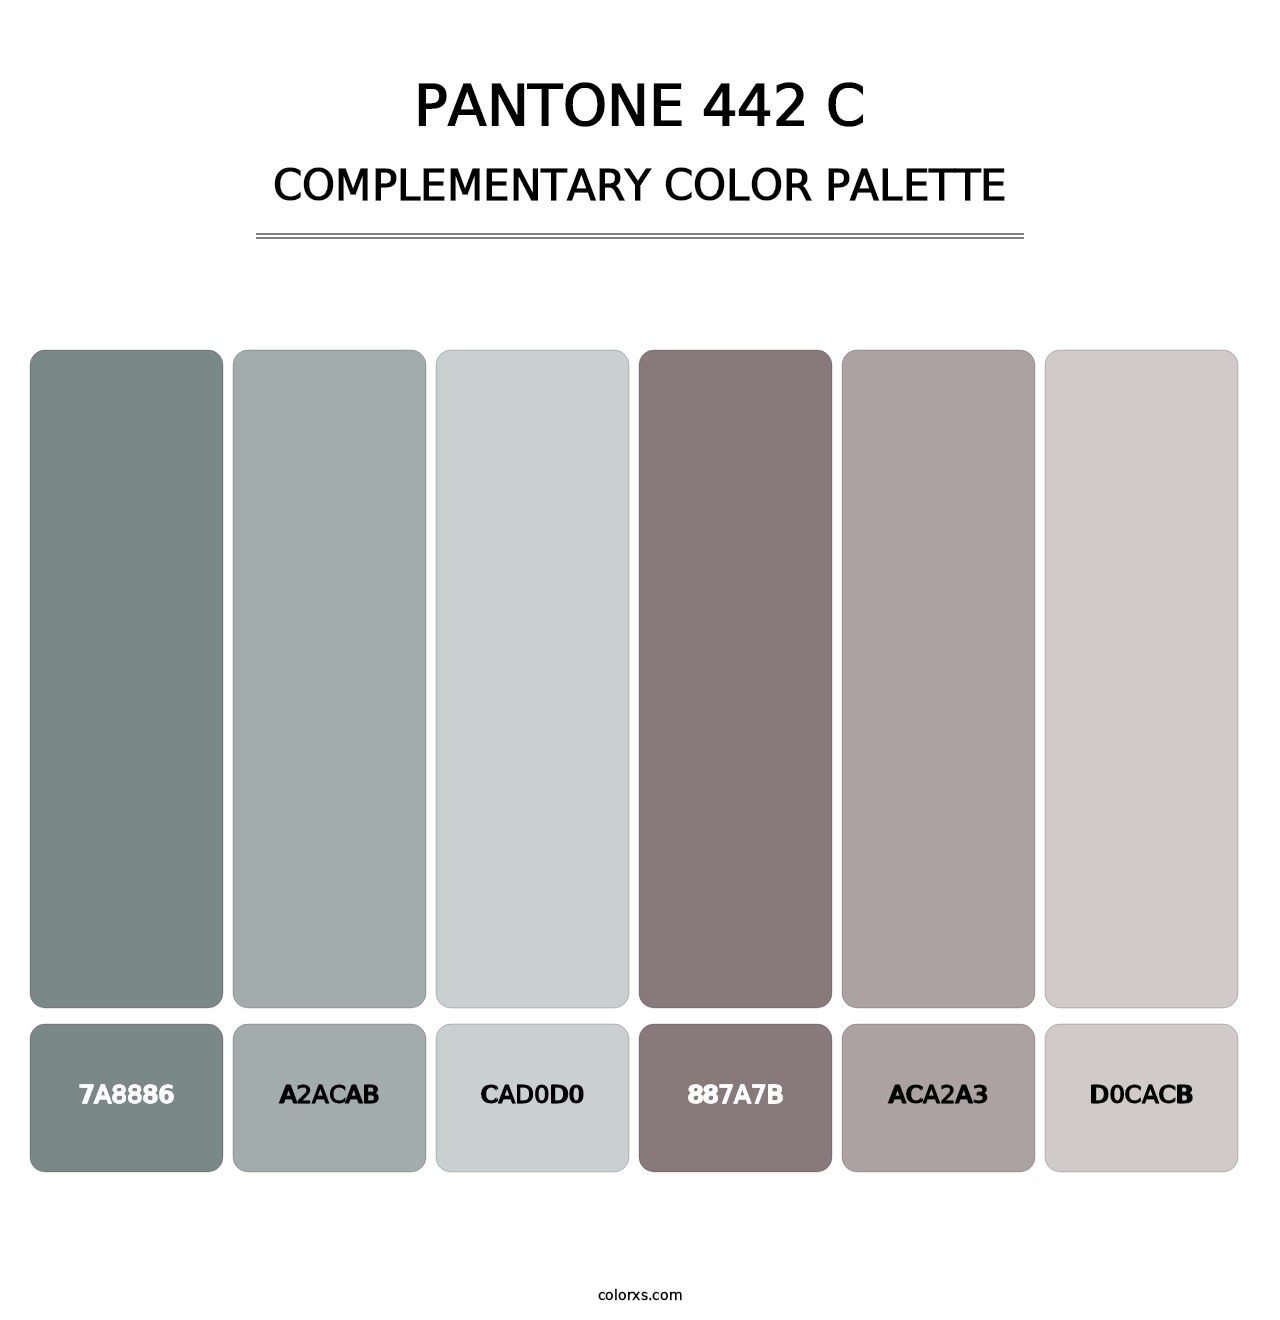 PANTONE 442 C - Complementary Color Palette